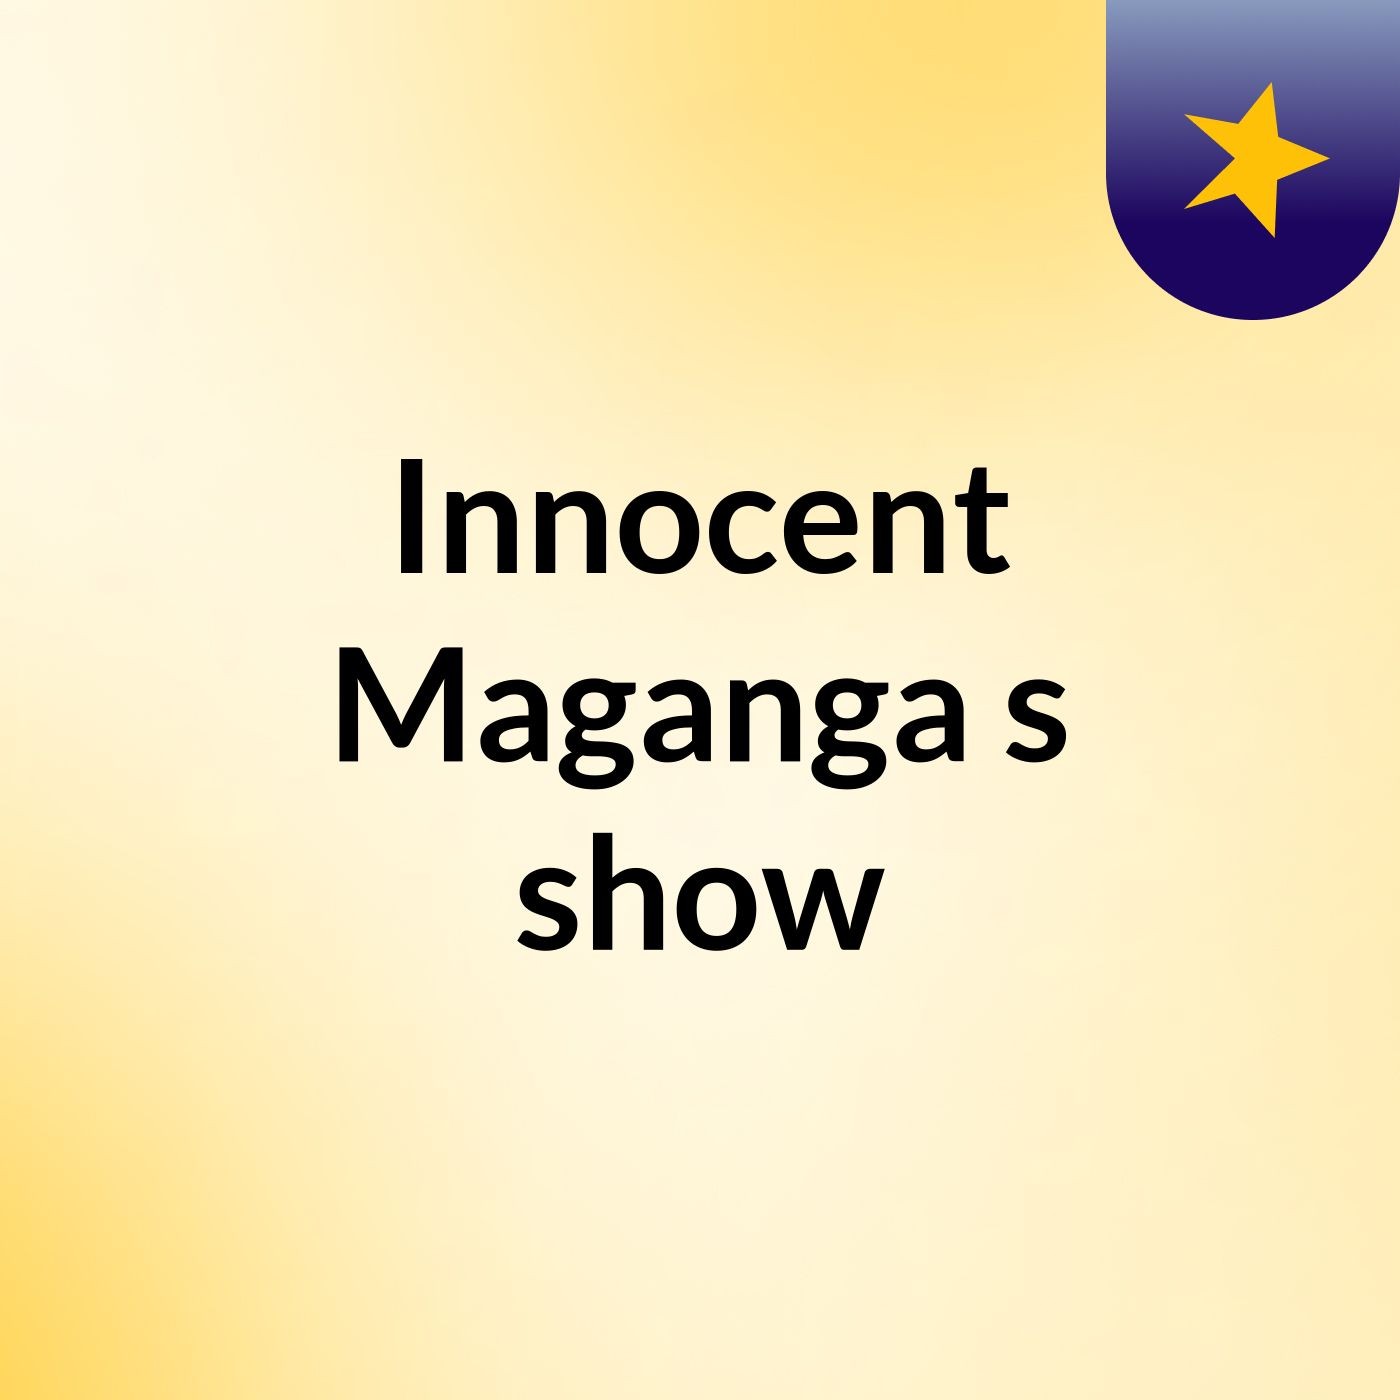 Innocent Maganga's show